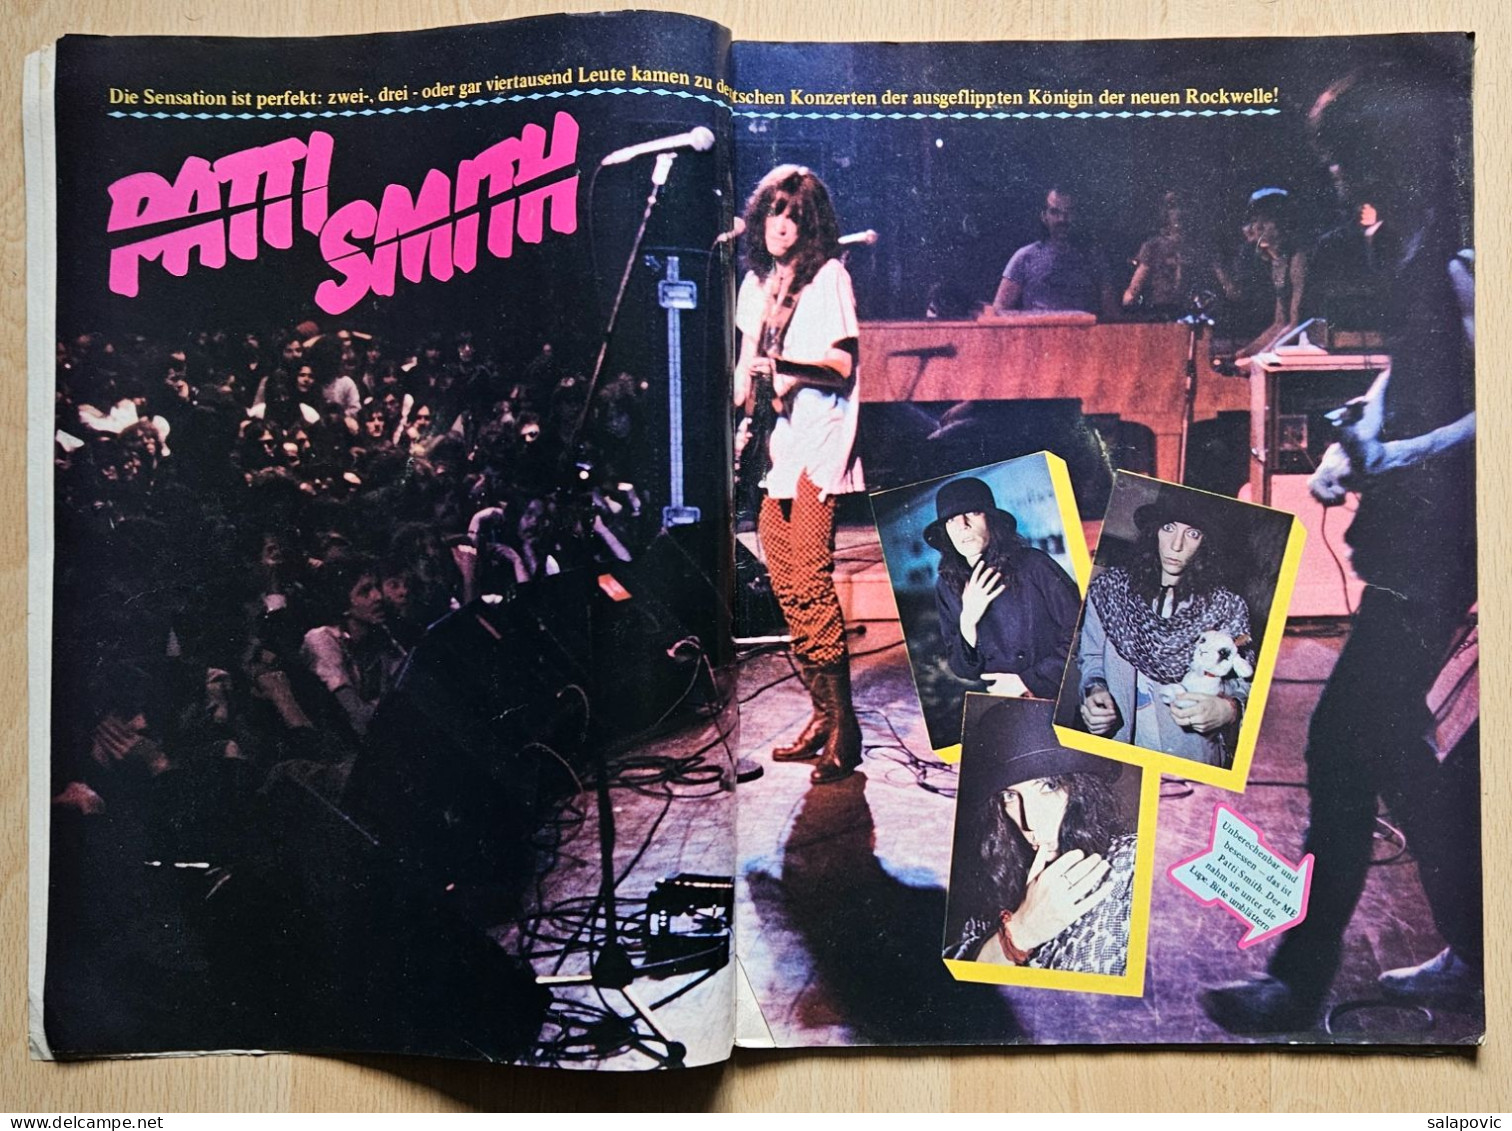 Musik Express [musikexpress]. Nr. 5 Mai 78 Neil Young, Patty Smith, Jethro Tull - Musica